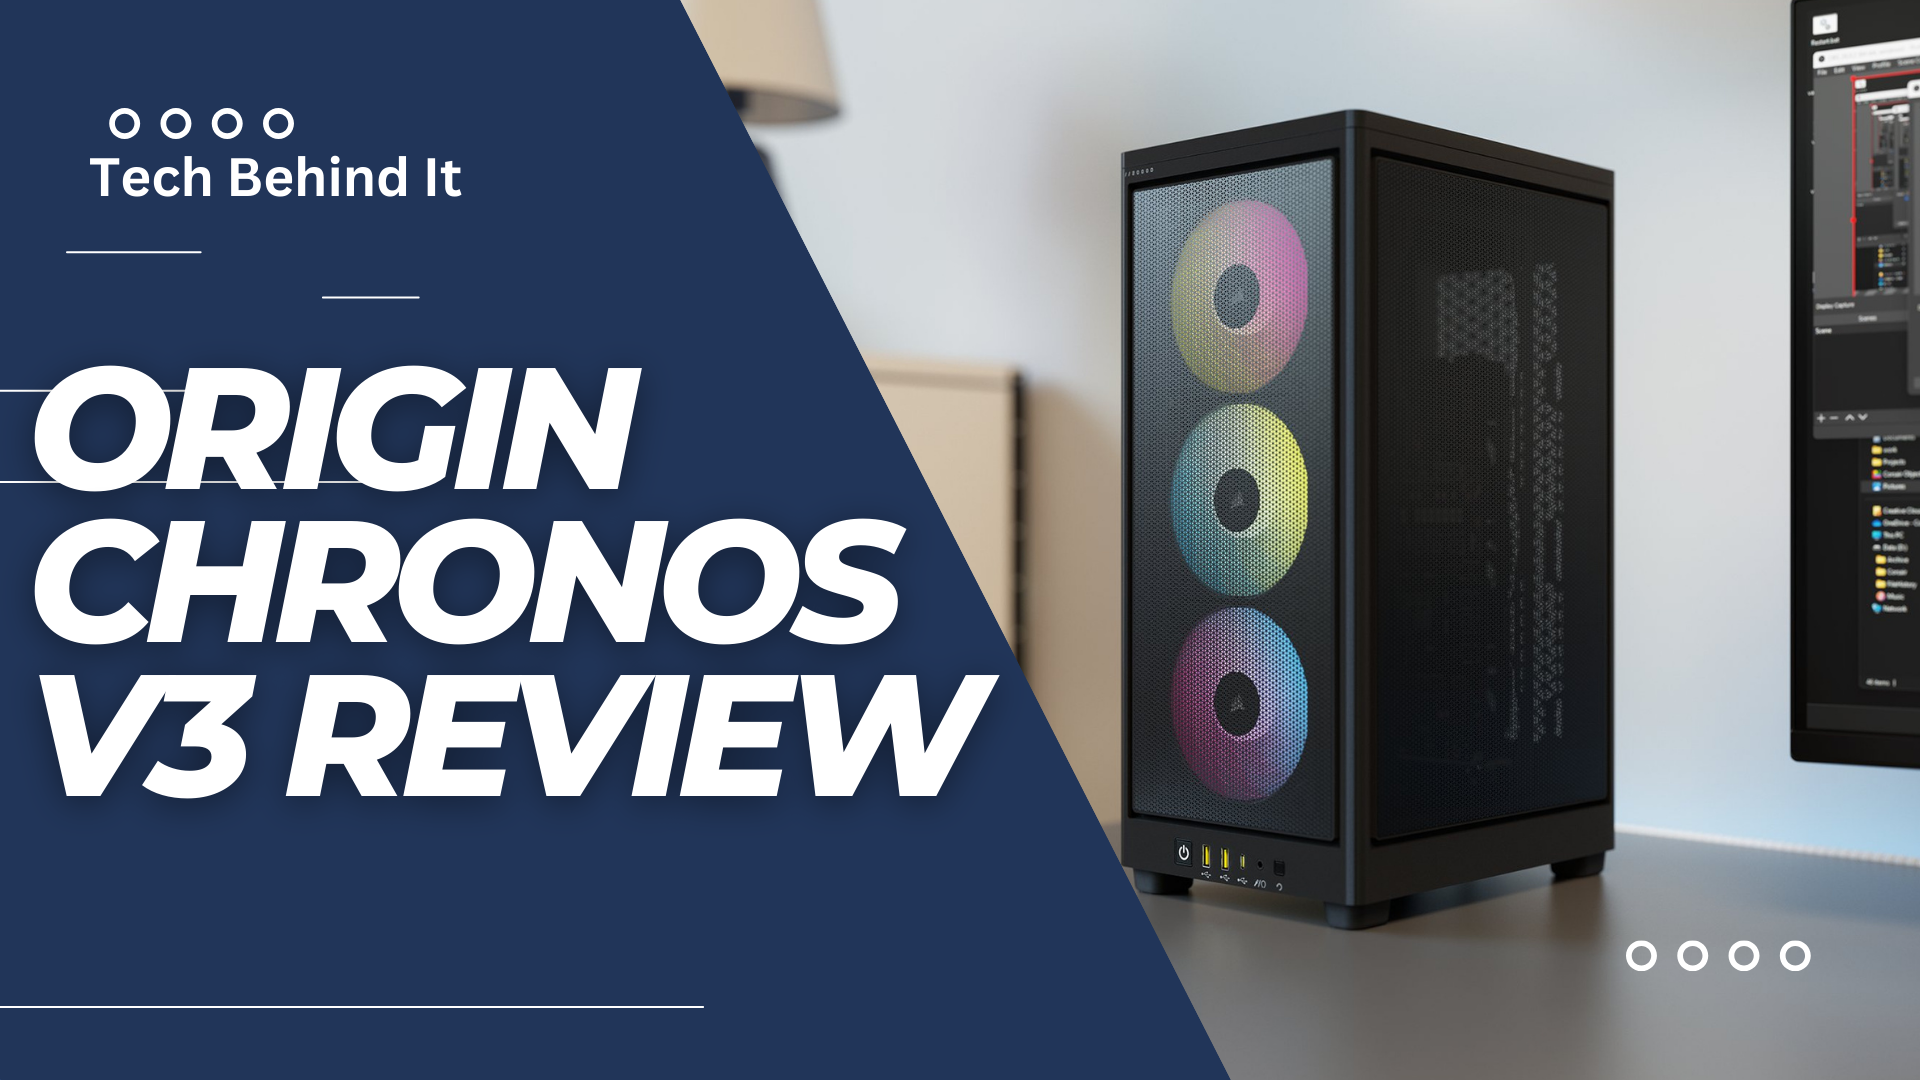 Origin Chronos V3 review: A Powerful and Compact Gaming PC